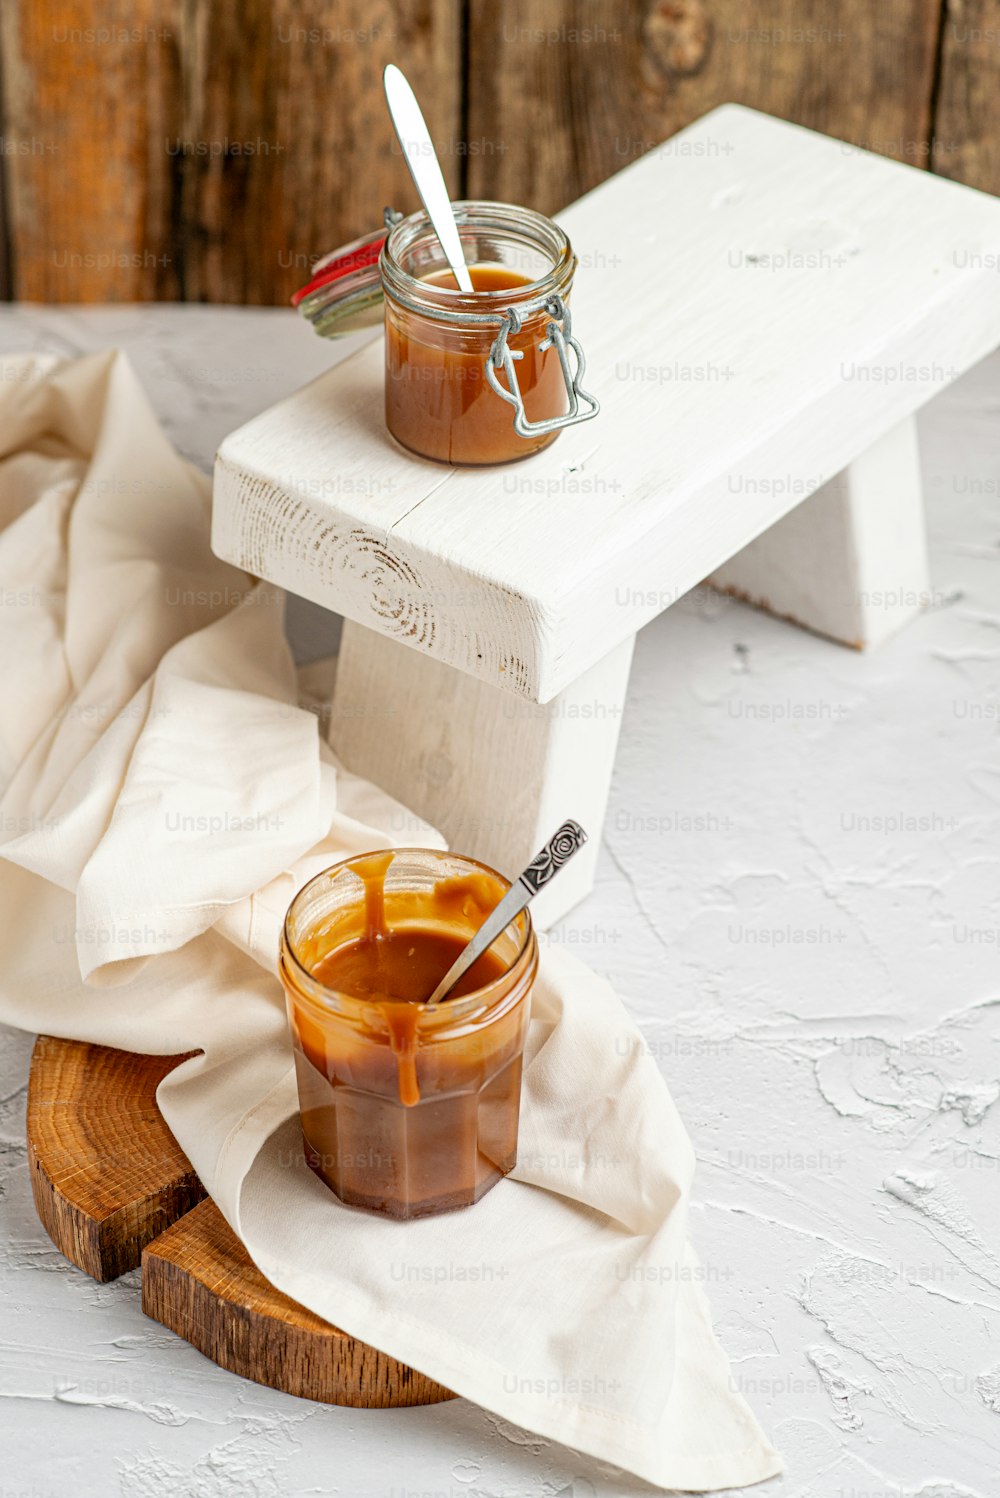 un frasco de salsa de caramelo sentado encima de una mesa de madera